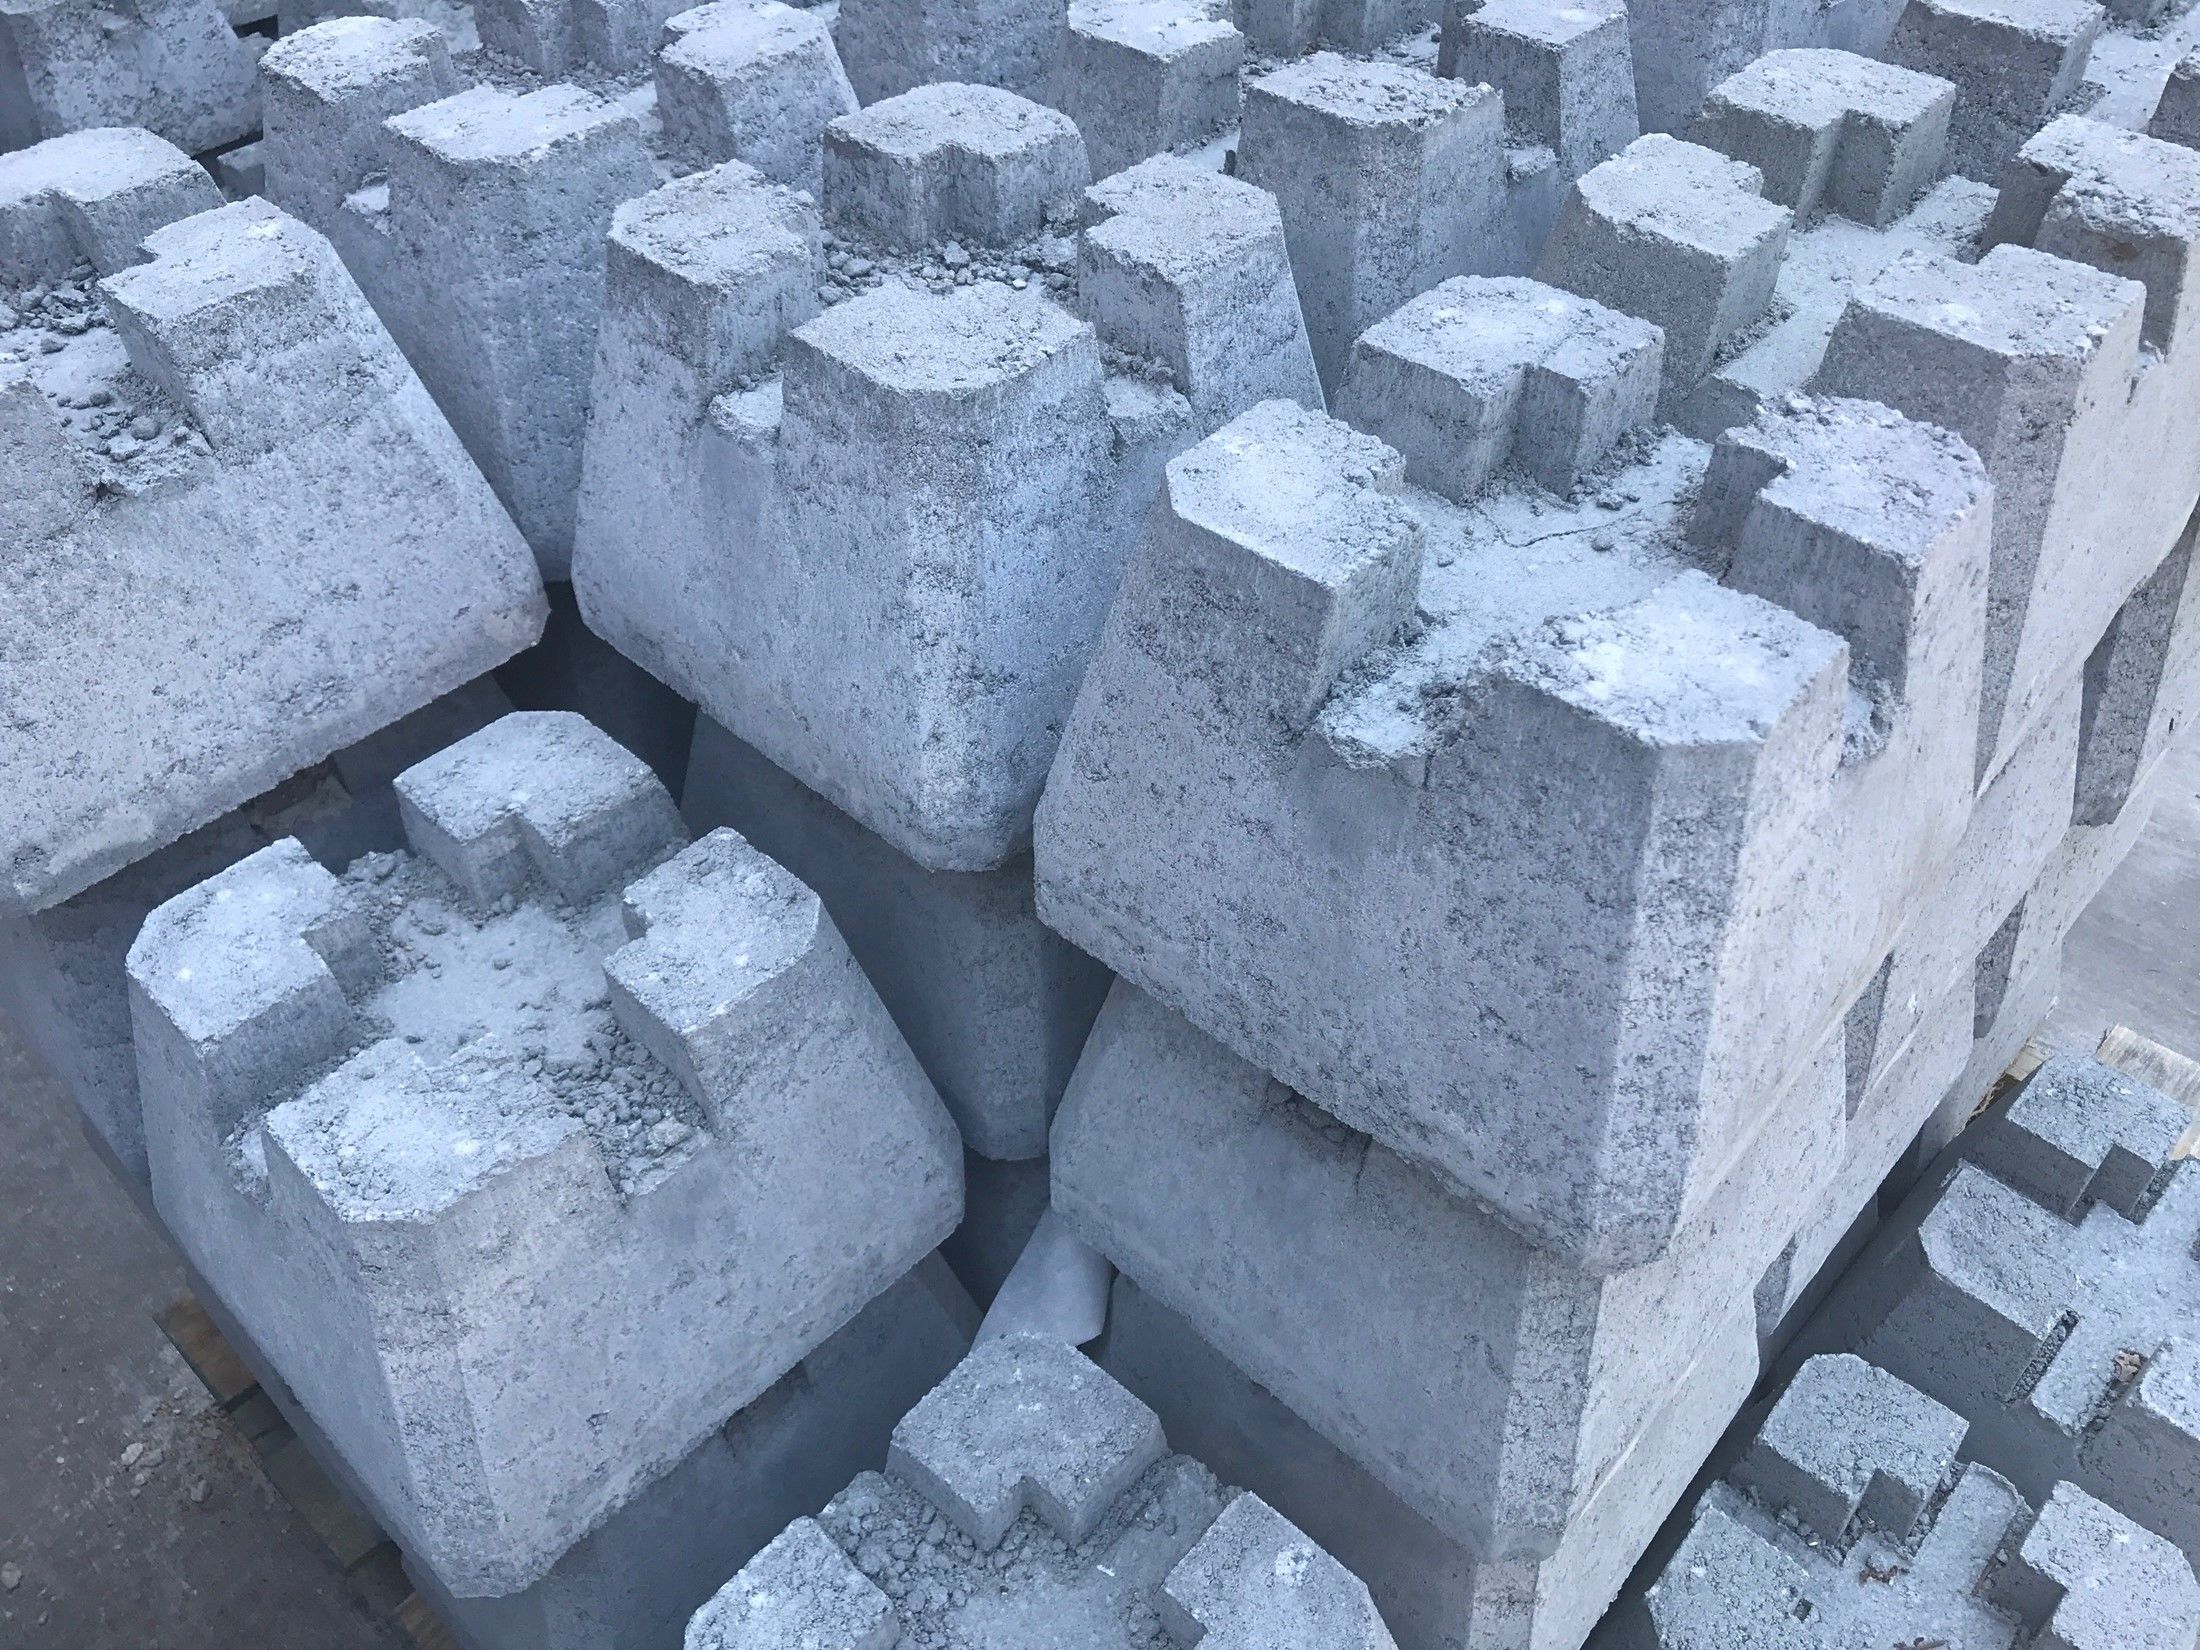 concrete deck blocks uses